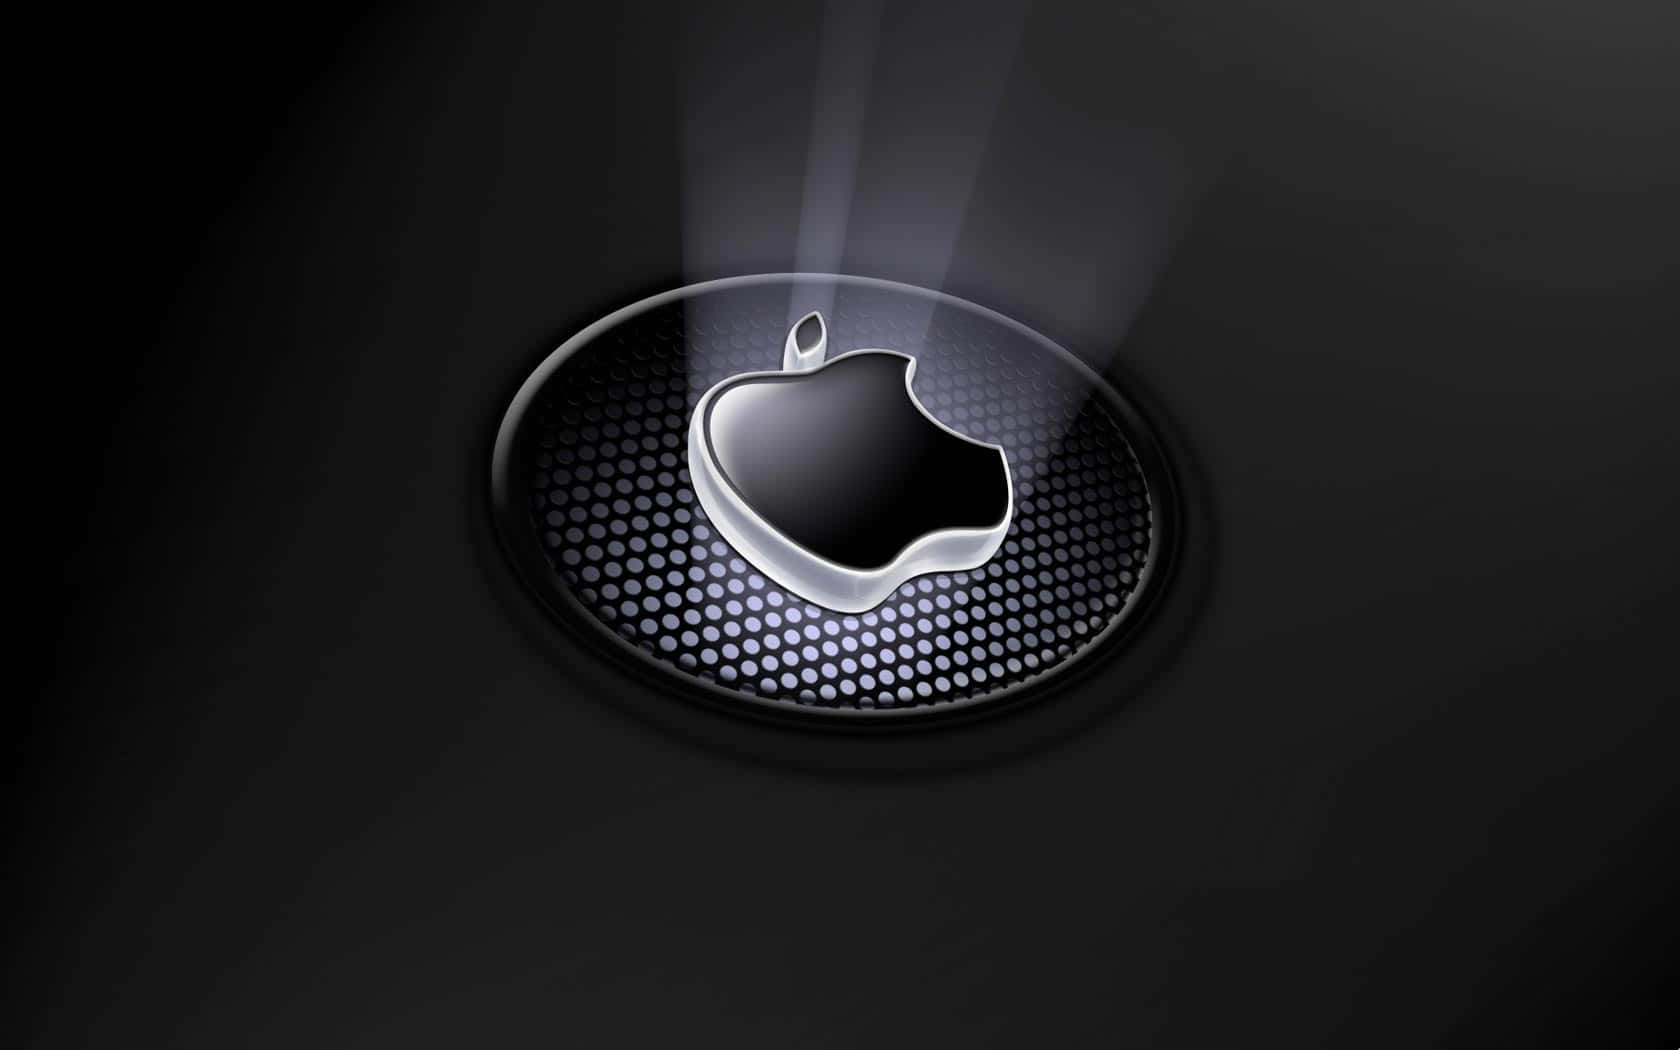 Logodi Apple Elegante Con Uno Sfondo A Sfumatura Mozzafiato.